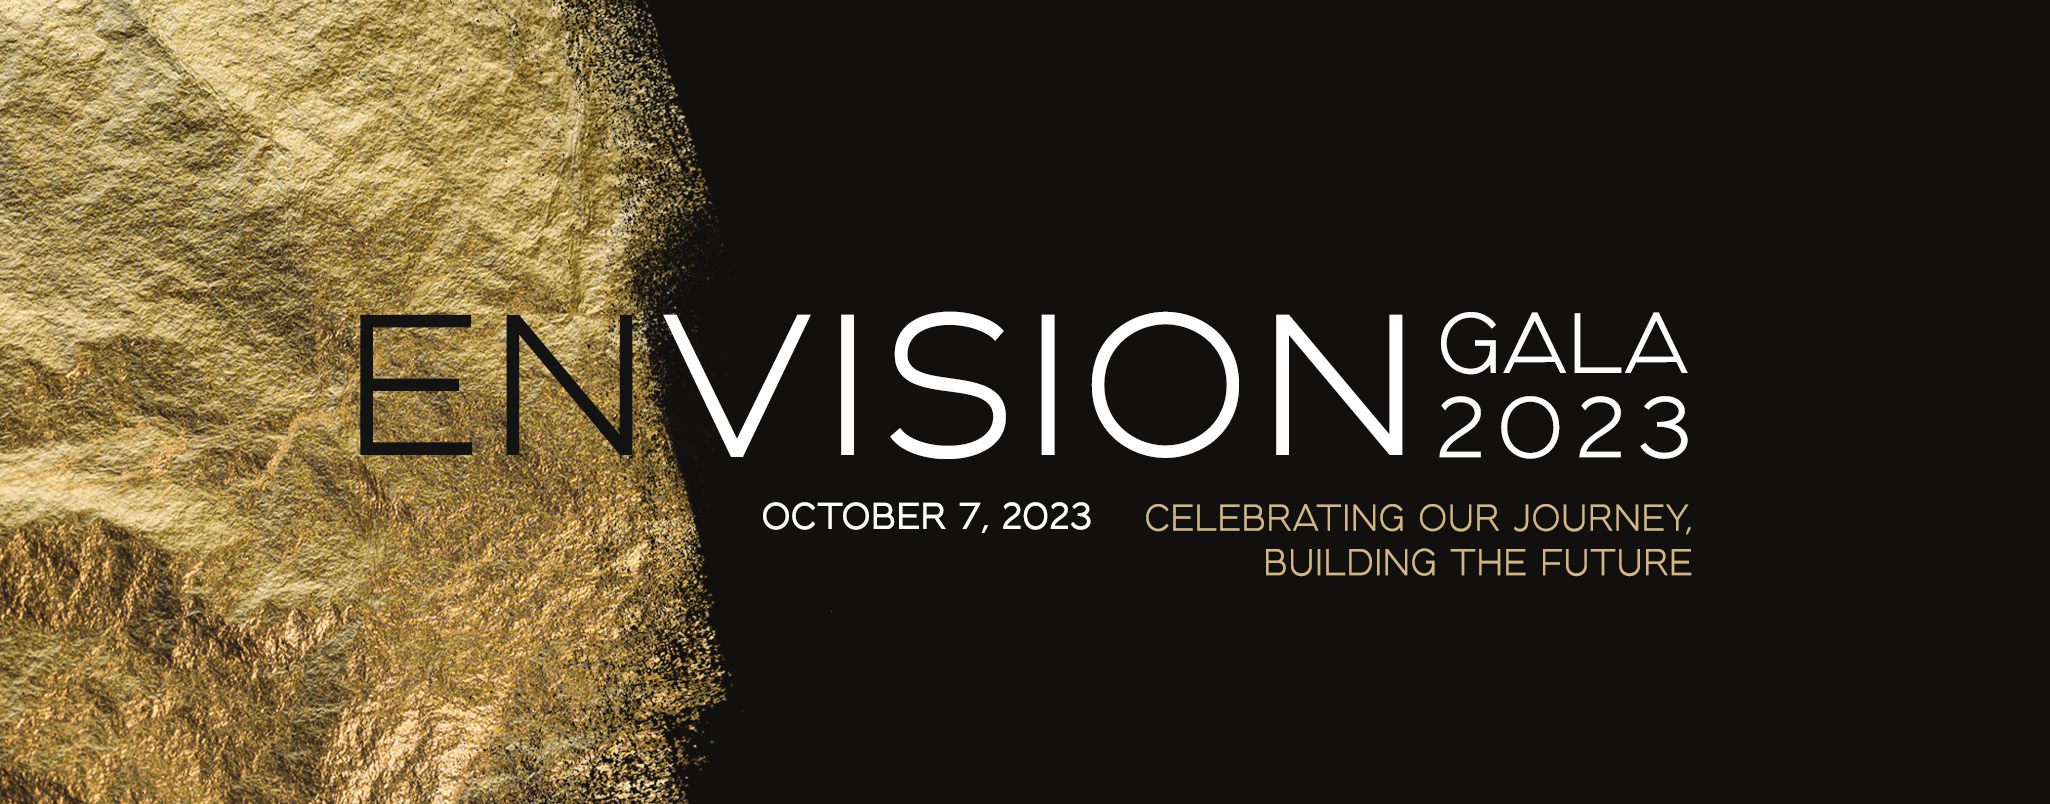 Envision Gala 2023 Web Banner